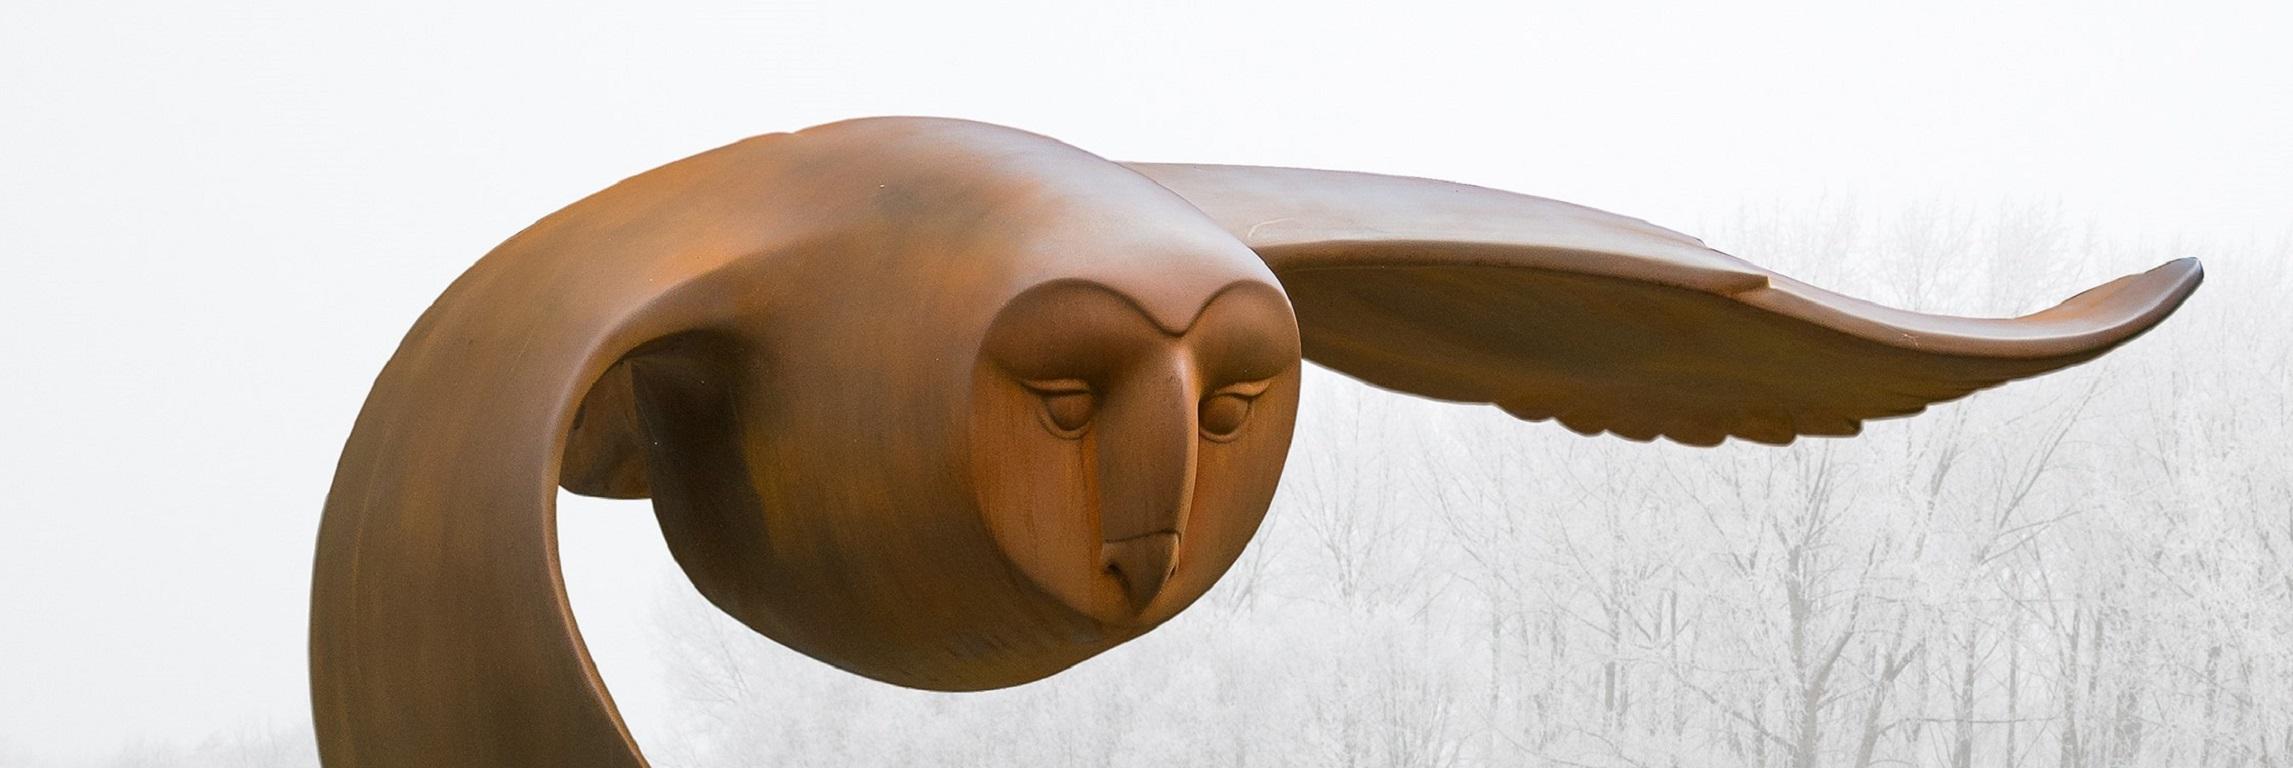 Sculpture de grand oiseau volant en polyester Cortensteel en forme de clou de Vliegende, en stock - Gris Figurative Sculpture par Evert den Hartog